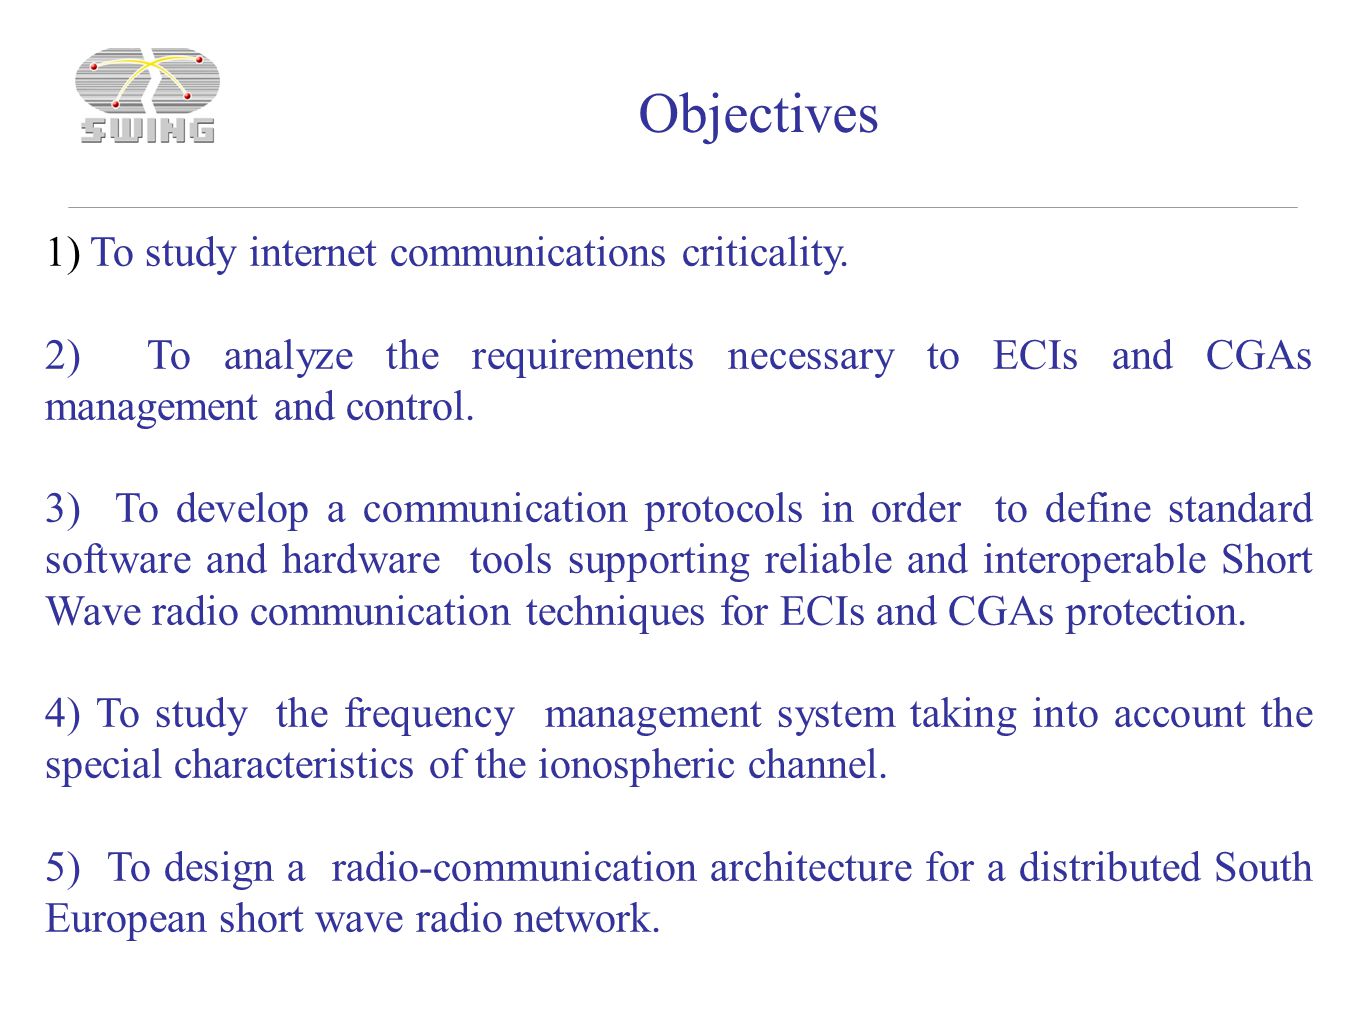 1) To study internet communications criticality.